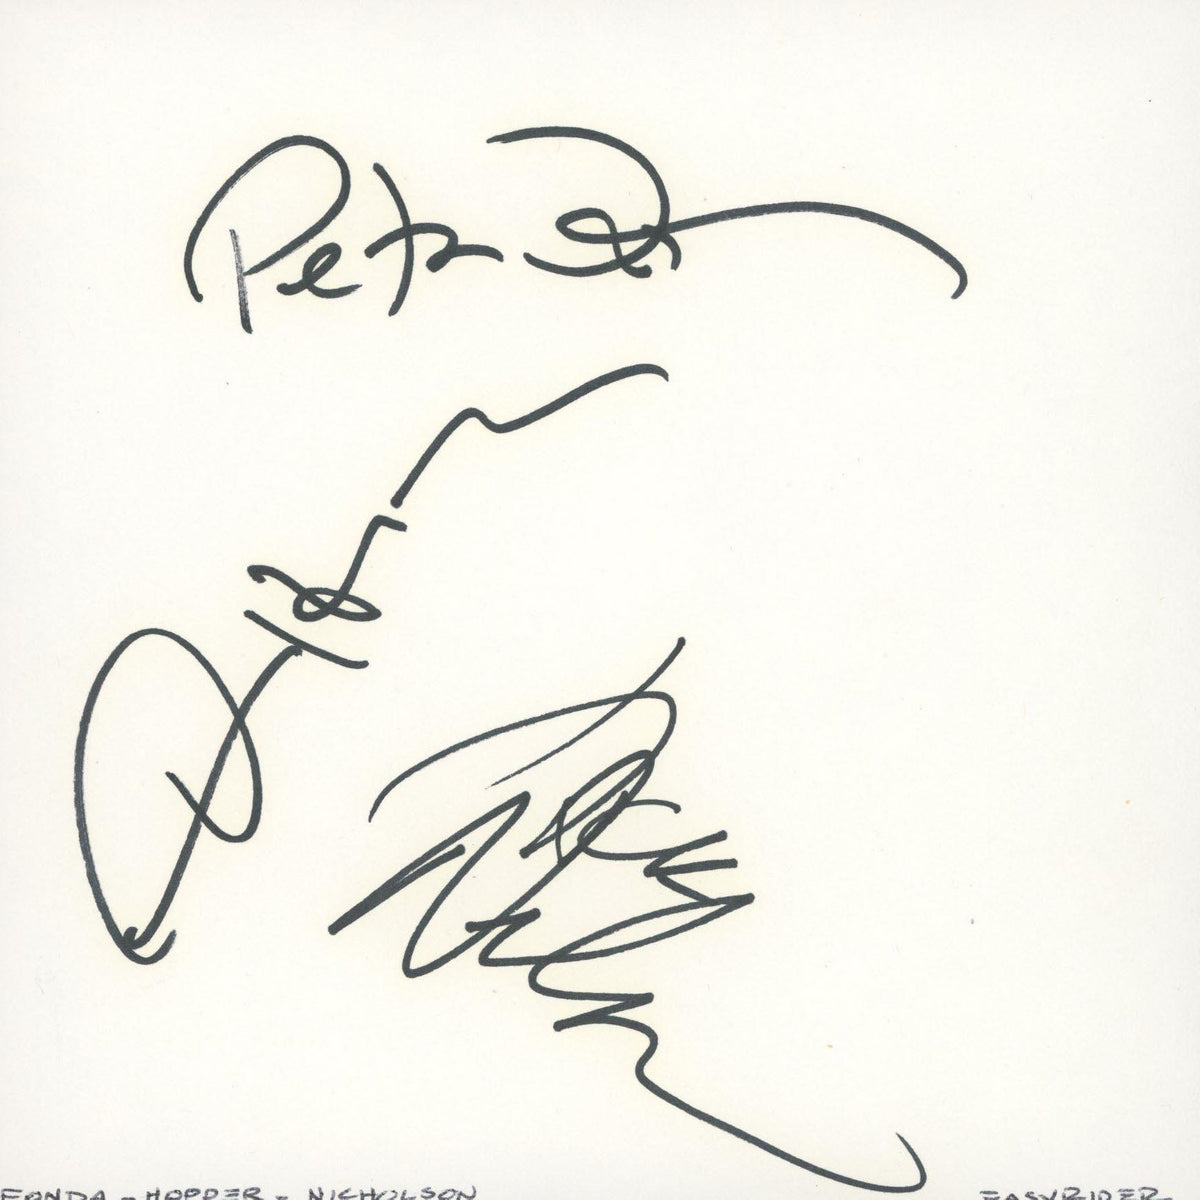 Dennis Hopper, Peter Fonda & Jack Nicholson signature cut